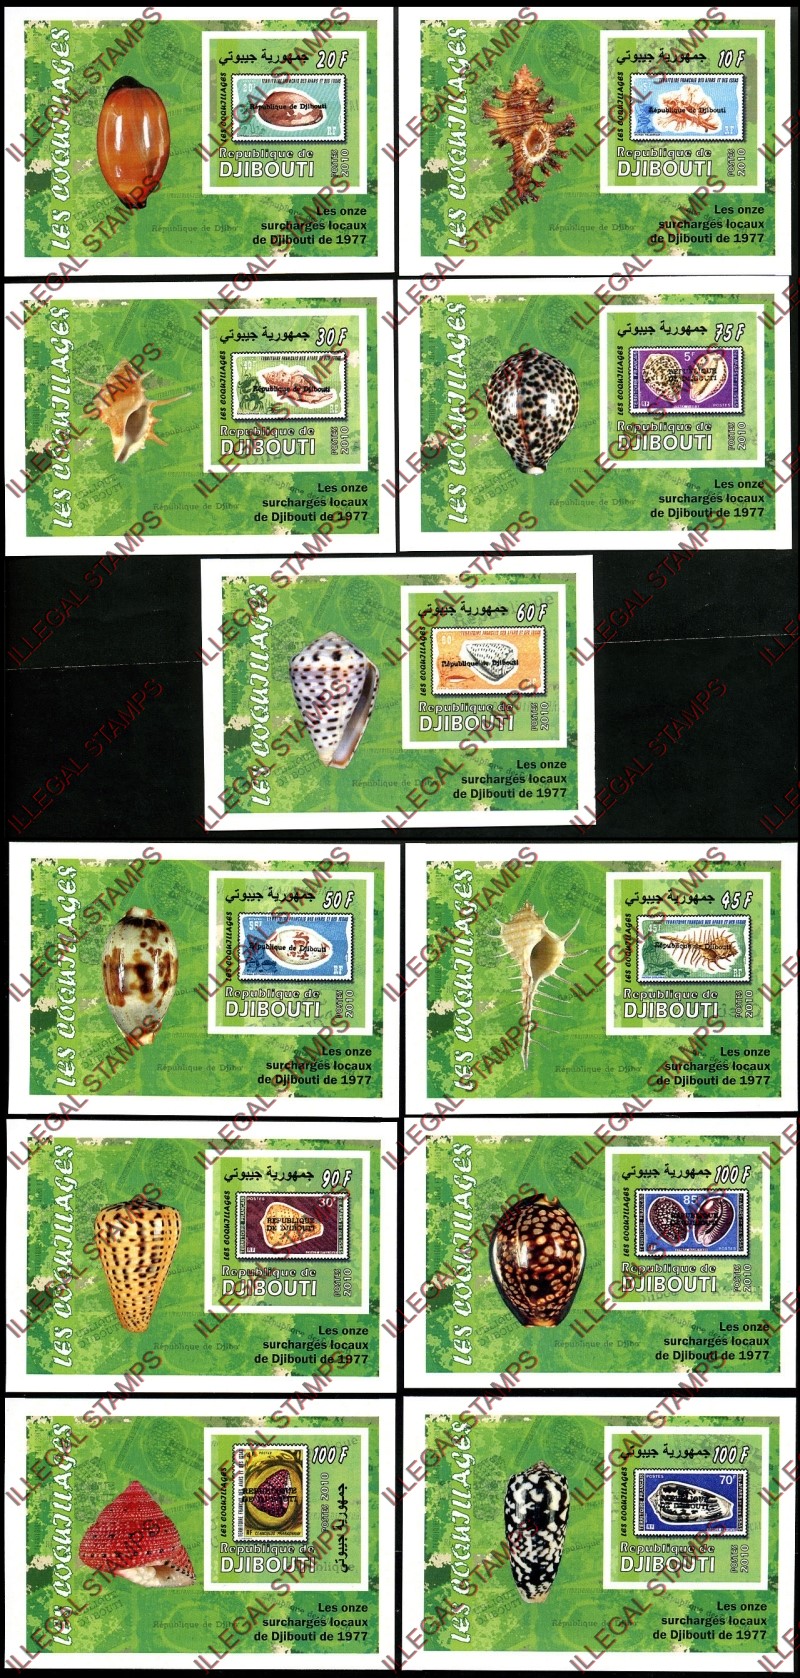 Djibouti 2010 Sea Shells Illegal Stamp Souvenir Sheets of 1